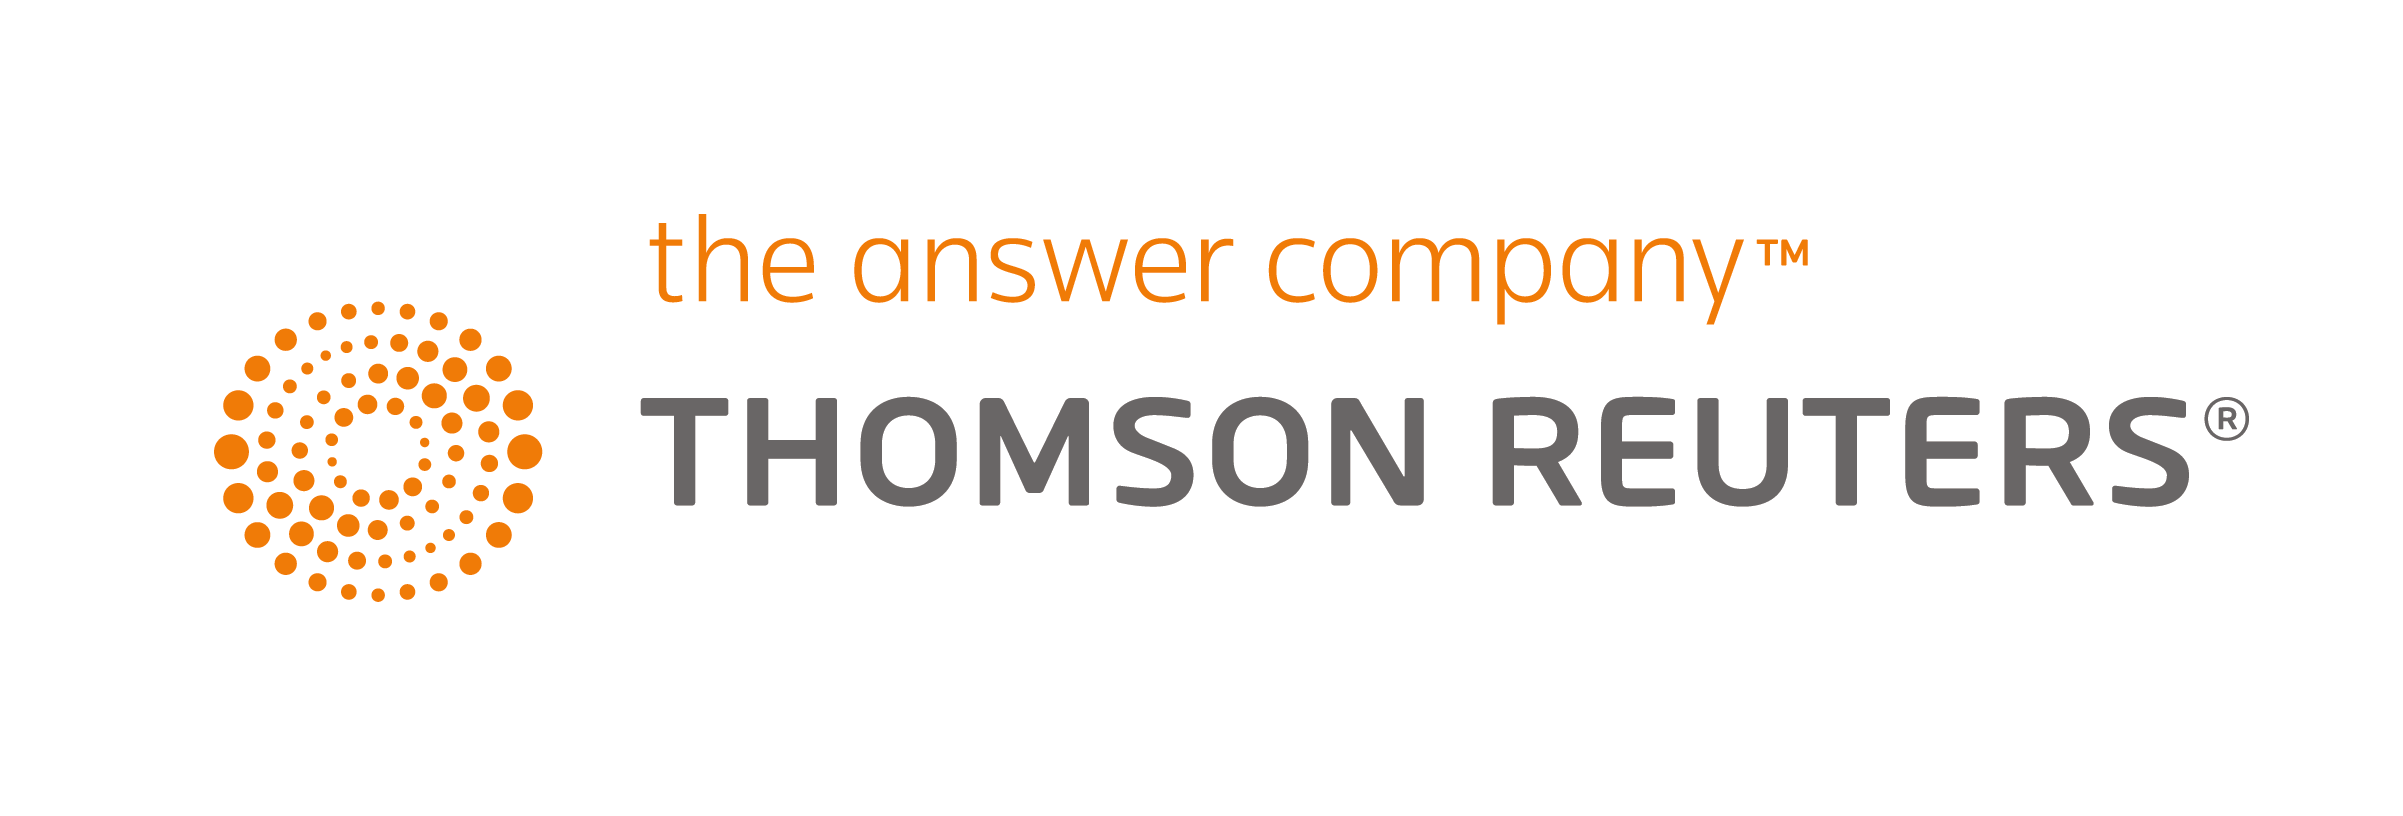 Thomson Reuters Logo - Ogletree Deakins Case Study